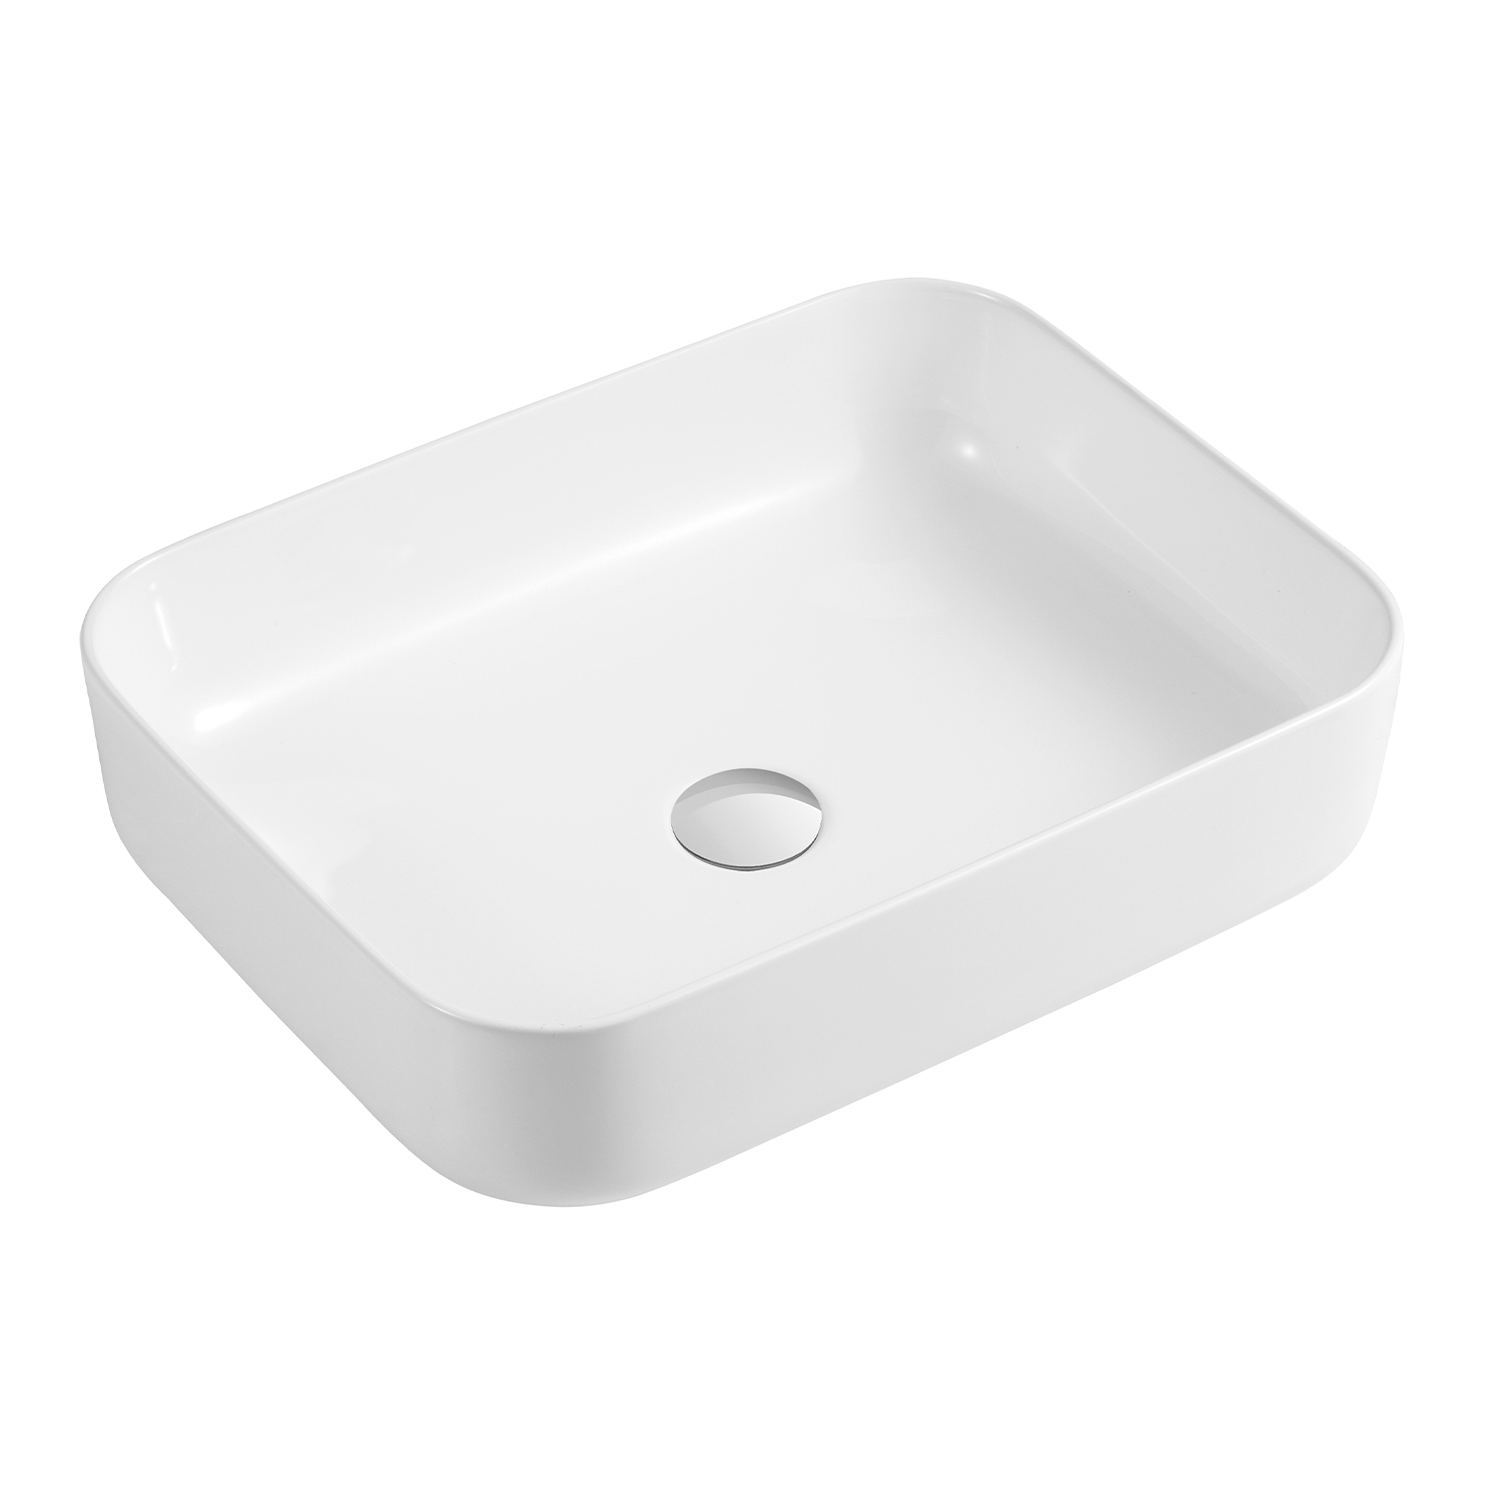 DAX - Lavabo rectangular de cerámica para baño, blanco brillante - (20" x 16.5") (DAX-CL1285-WG)